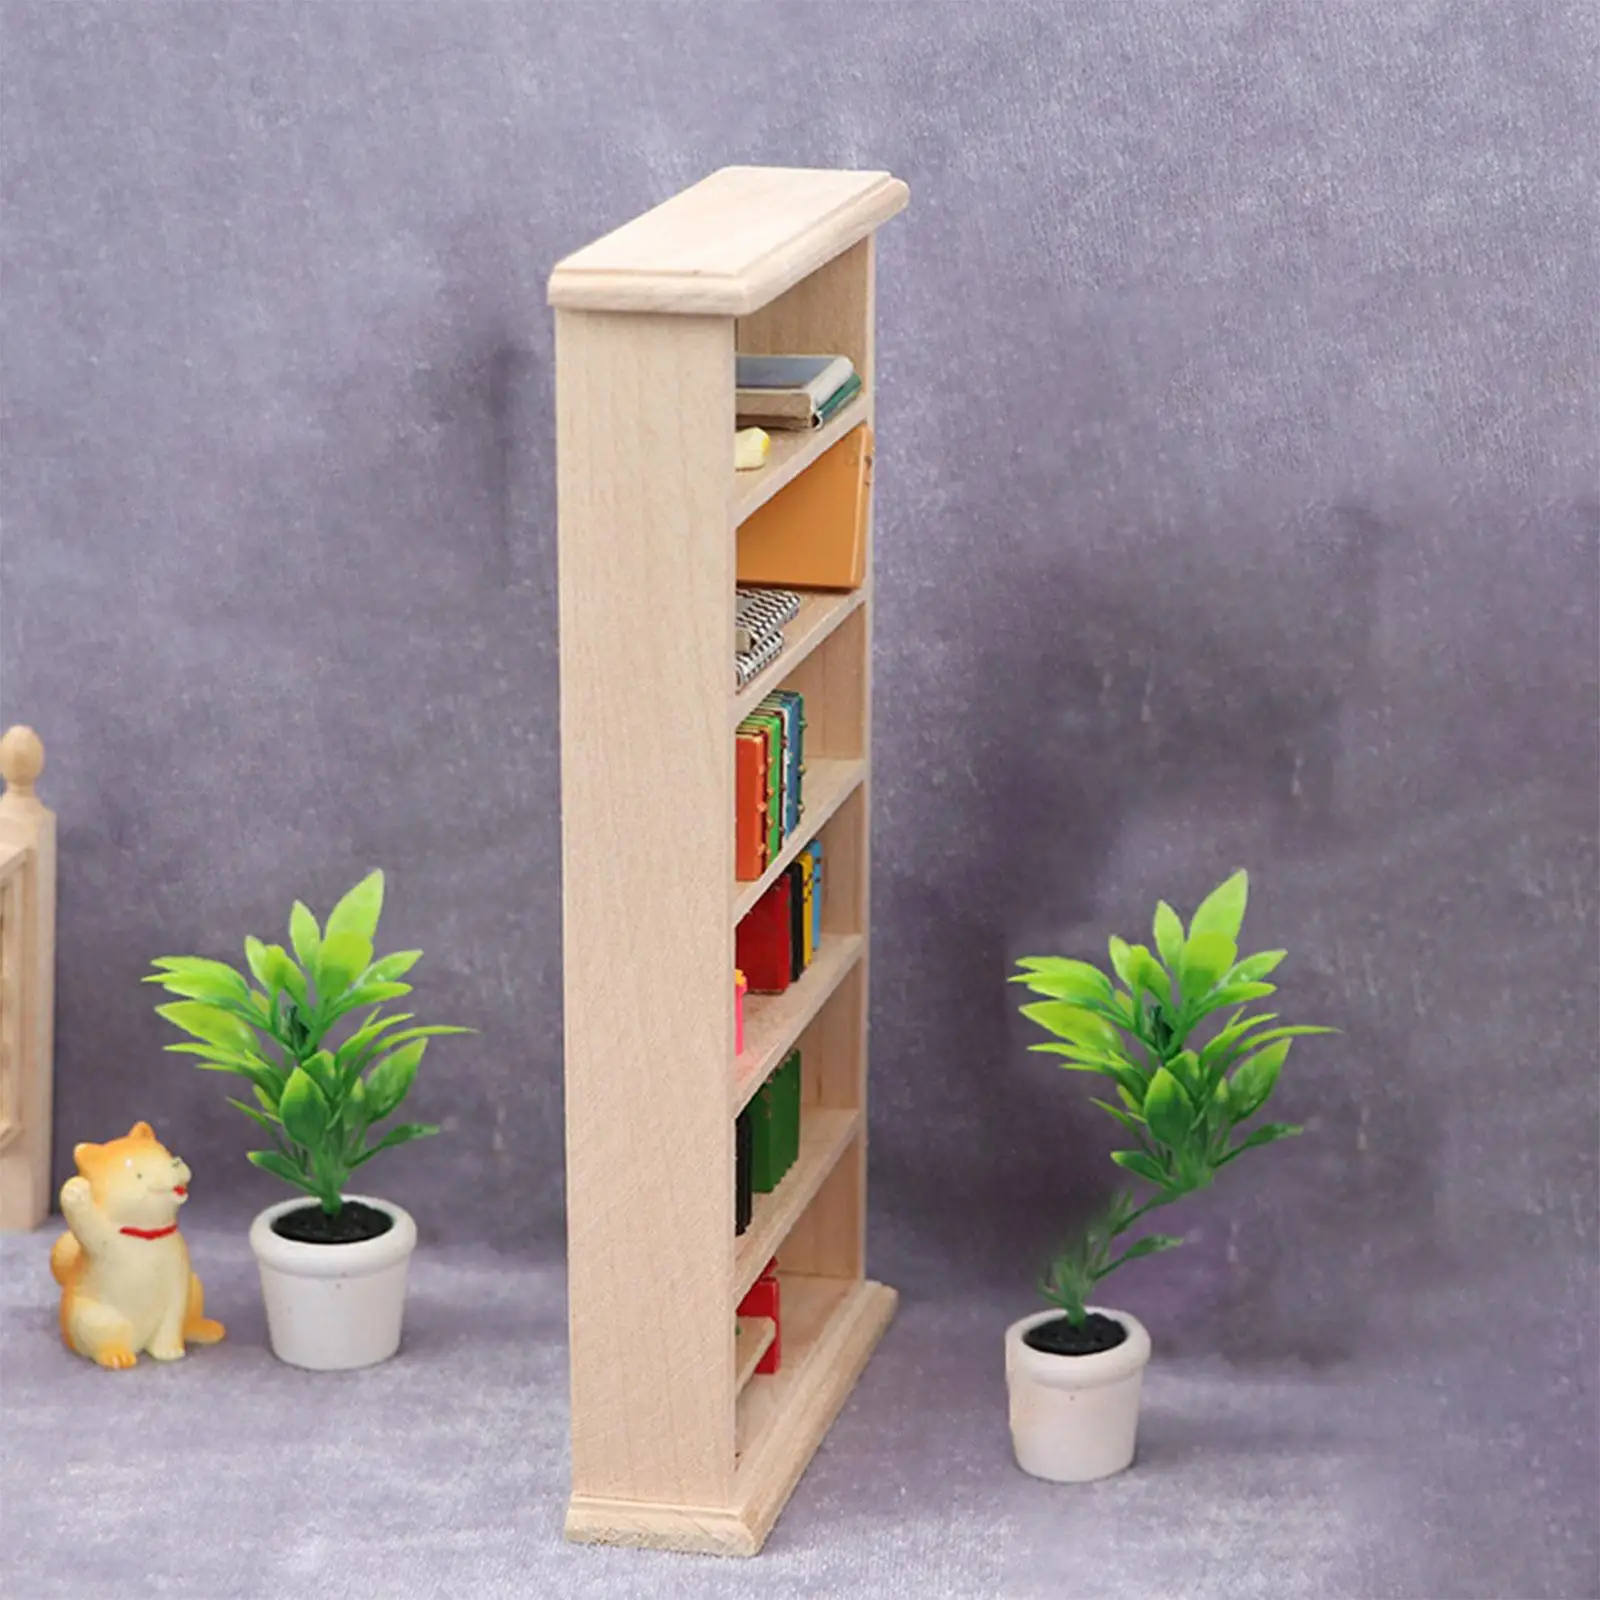 1/12 Dollhouse Miniature Bookcase Dollhouse Miniature Furniture for Kids 3+